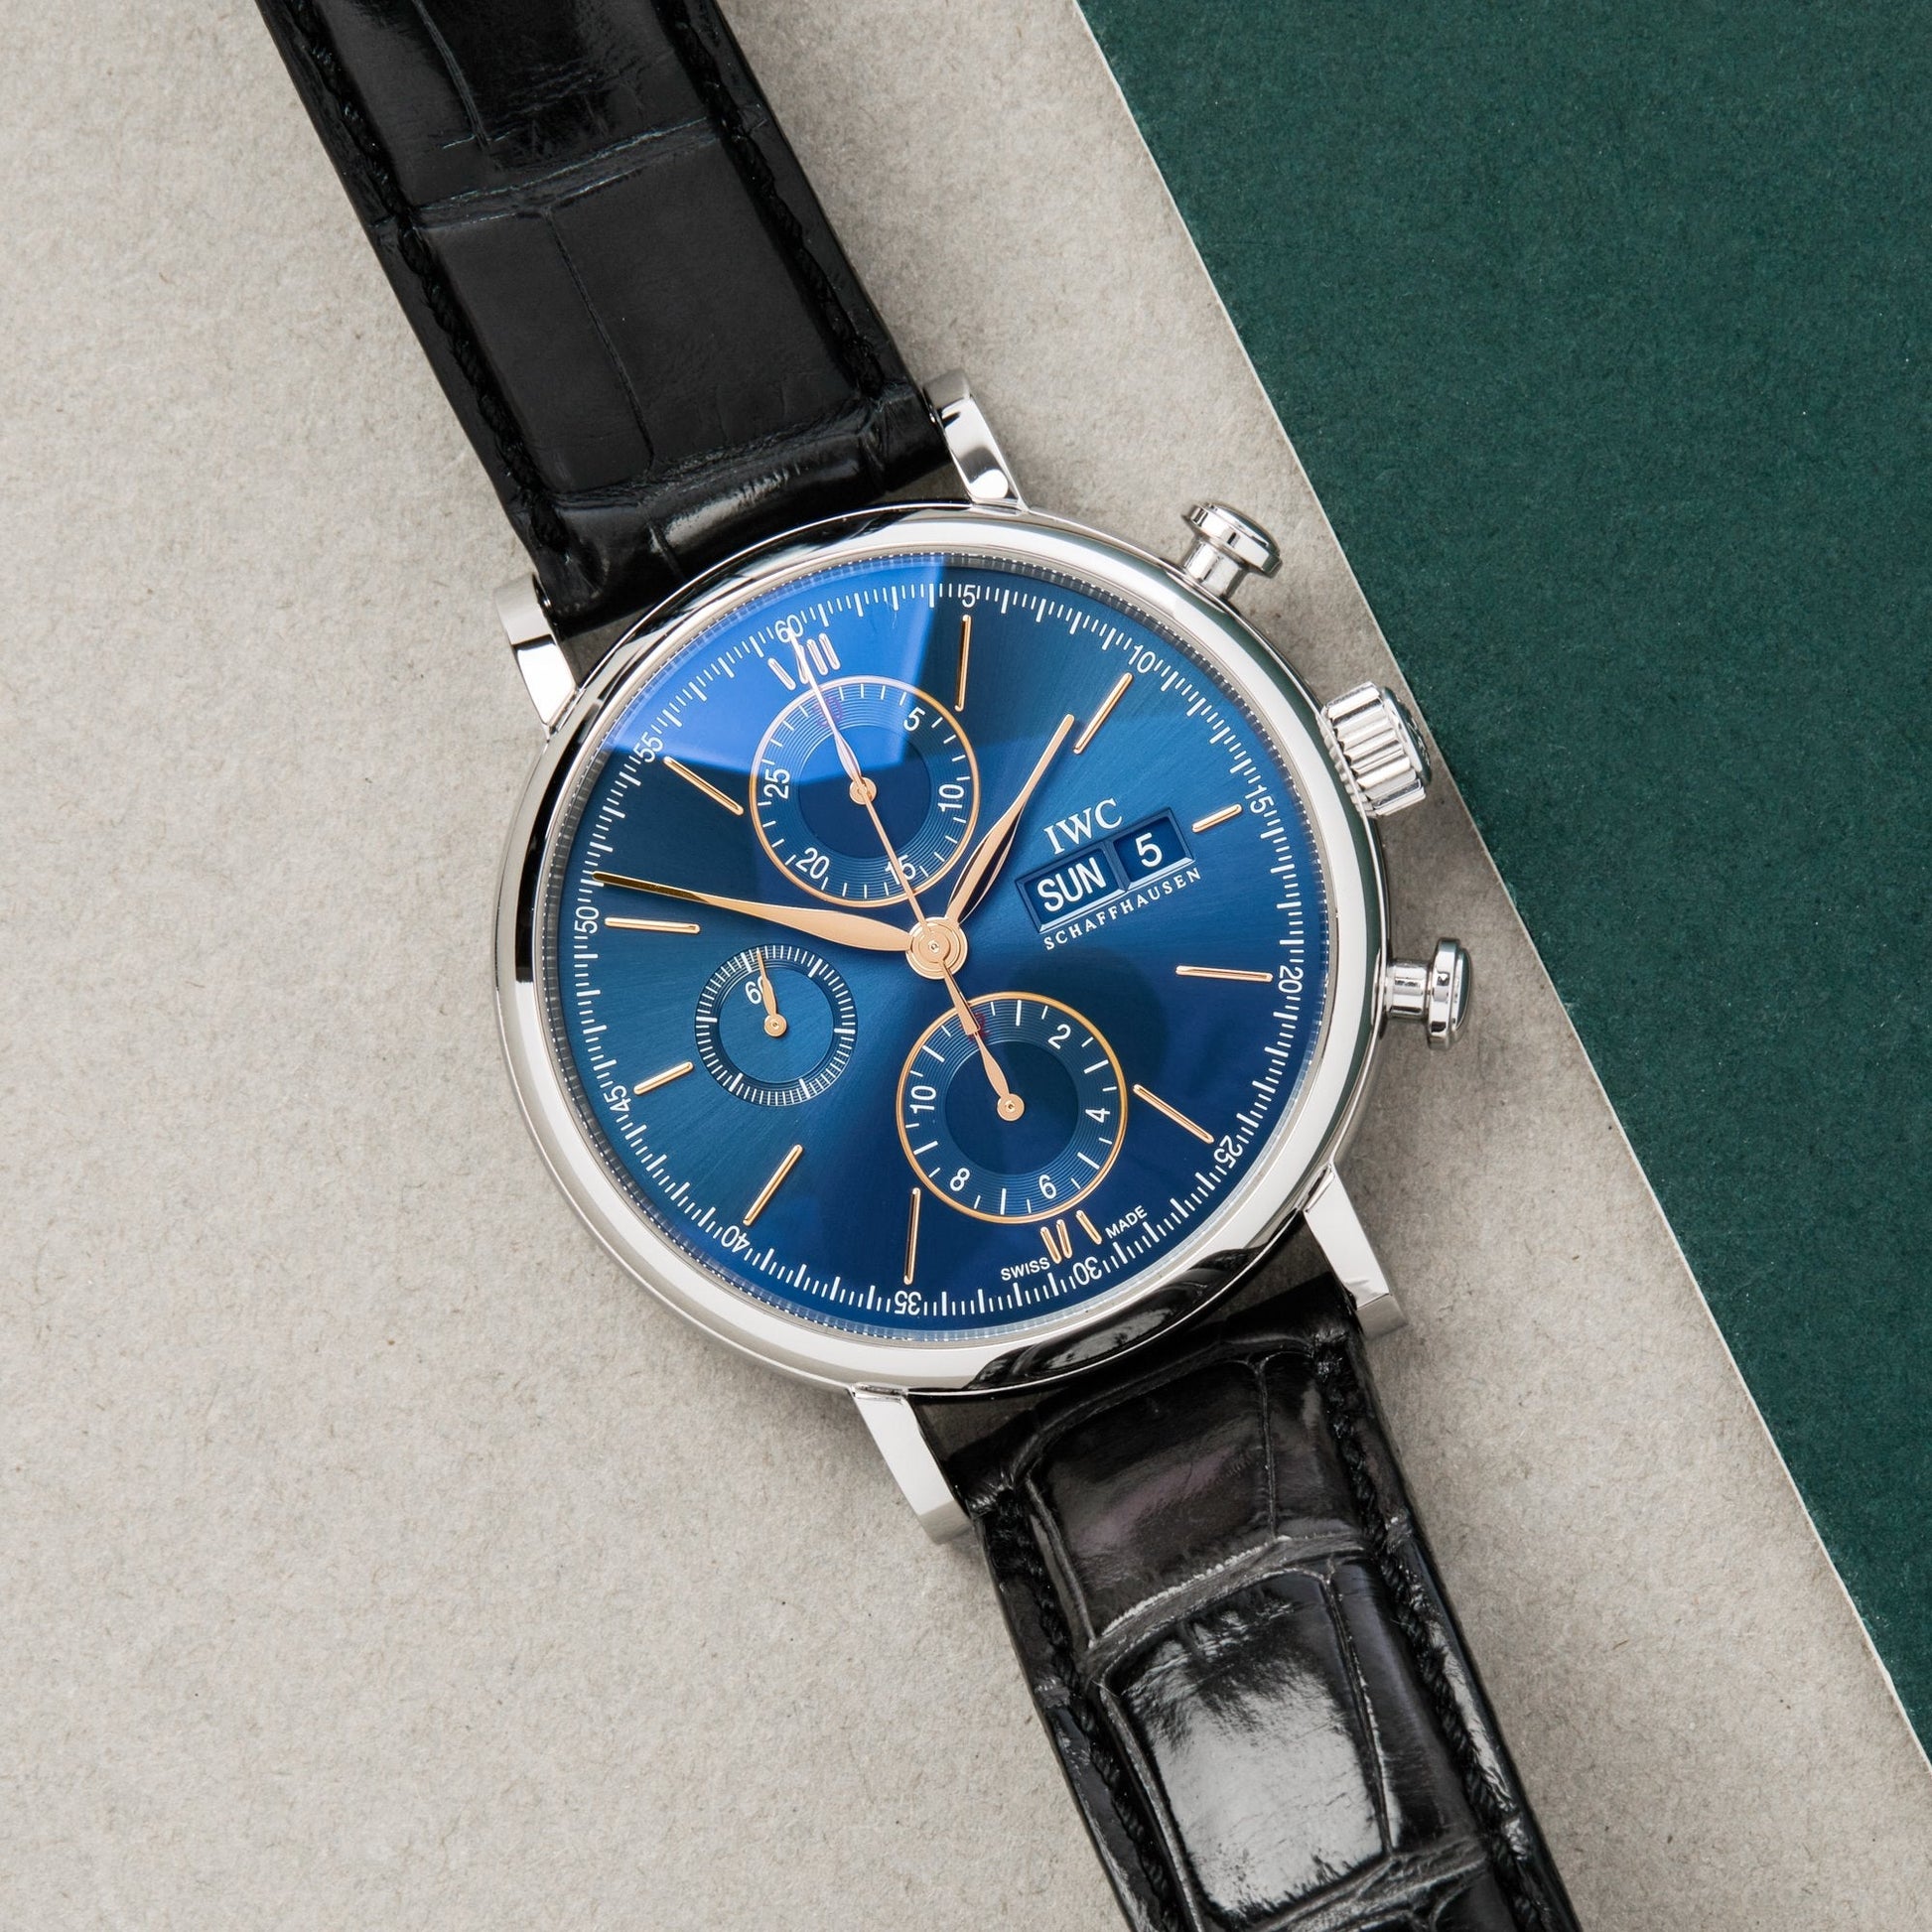 IWC Portofino Chronograph Blue Dial Black Leather Strap Watch for Men - IW391036